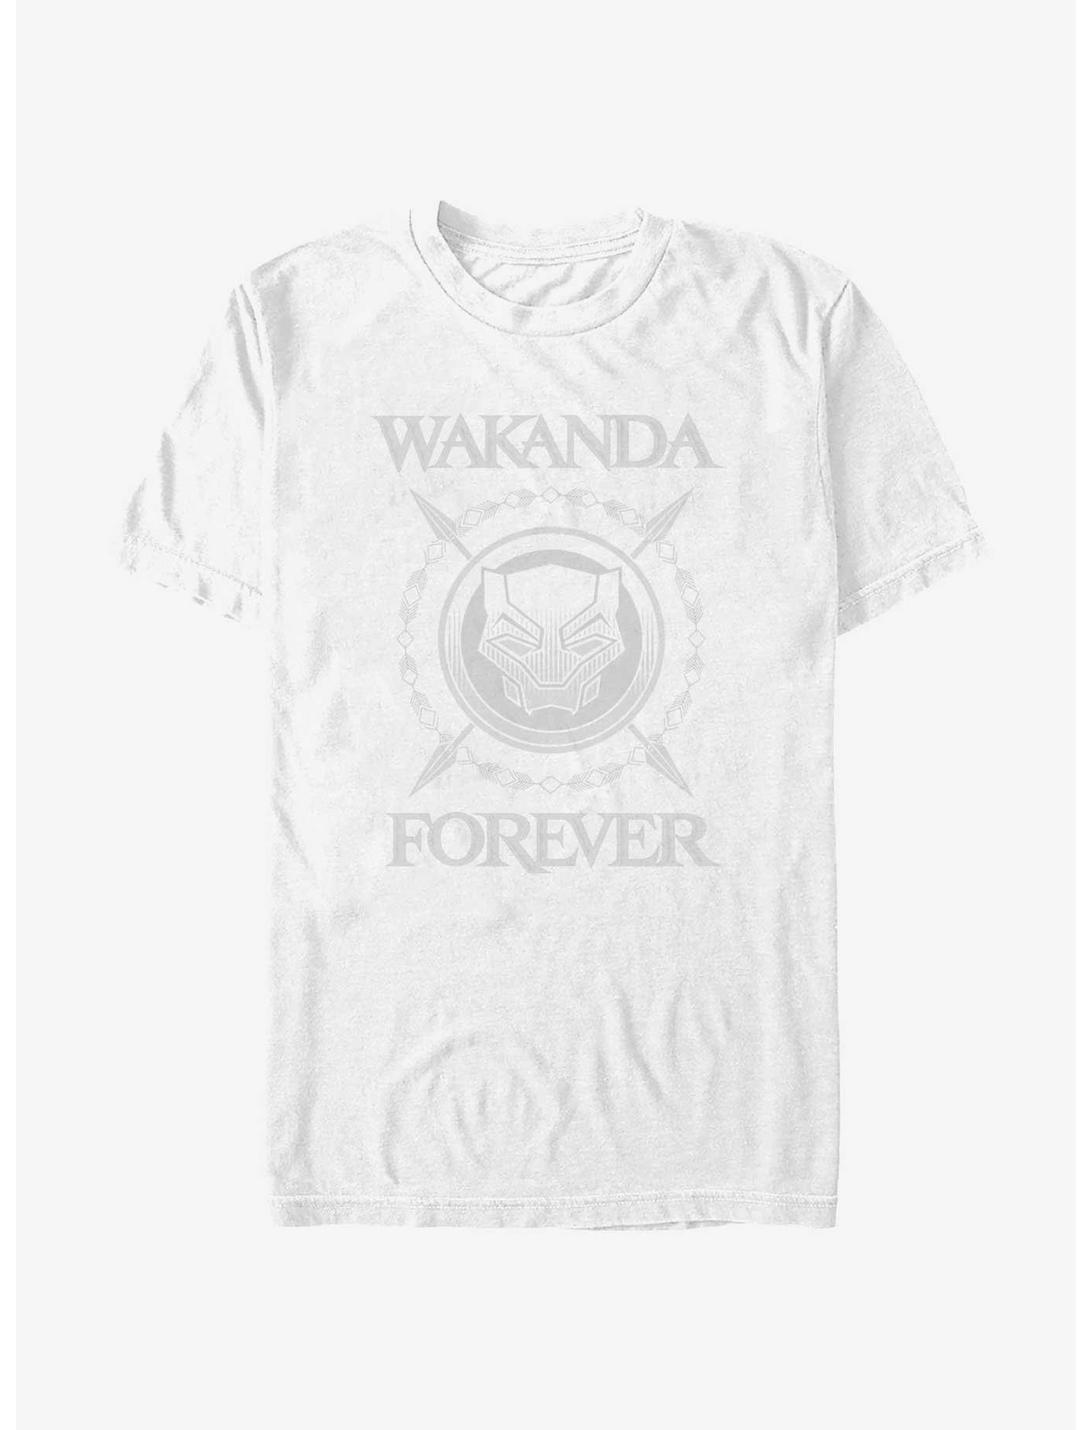 Marvel Black Panther: Wakanda Forever Crossed Spears Logo T-Shirt, WHITE, hi-res